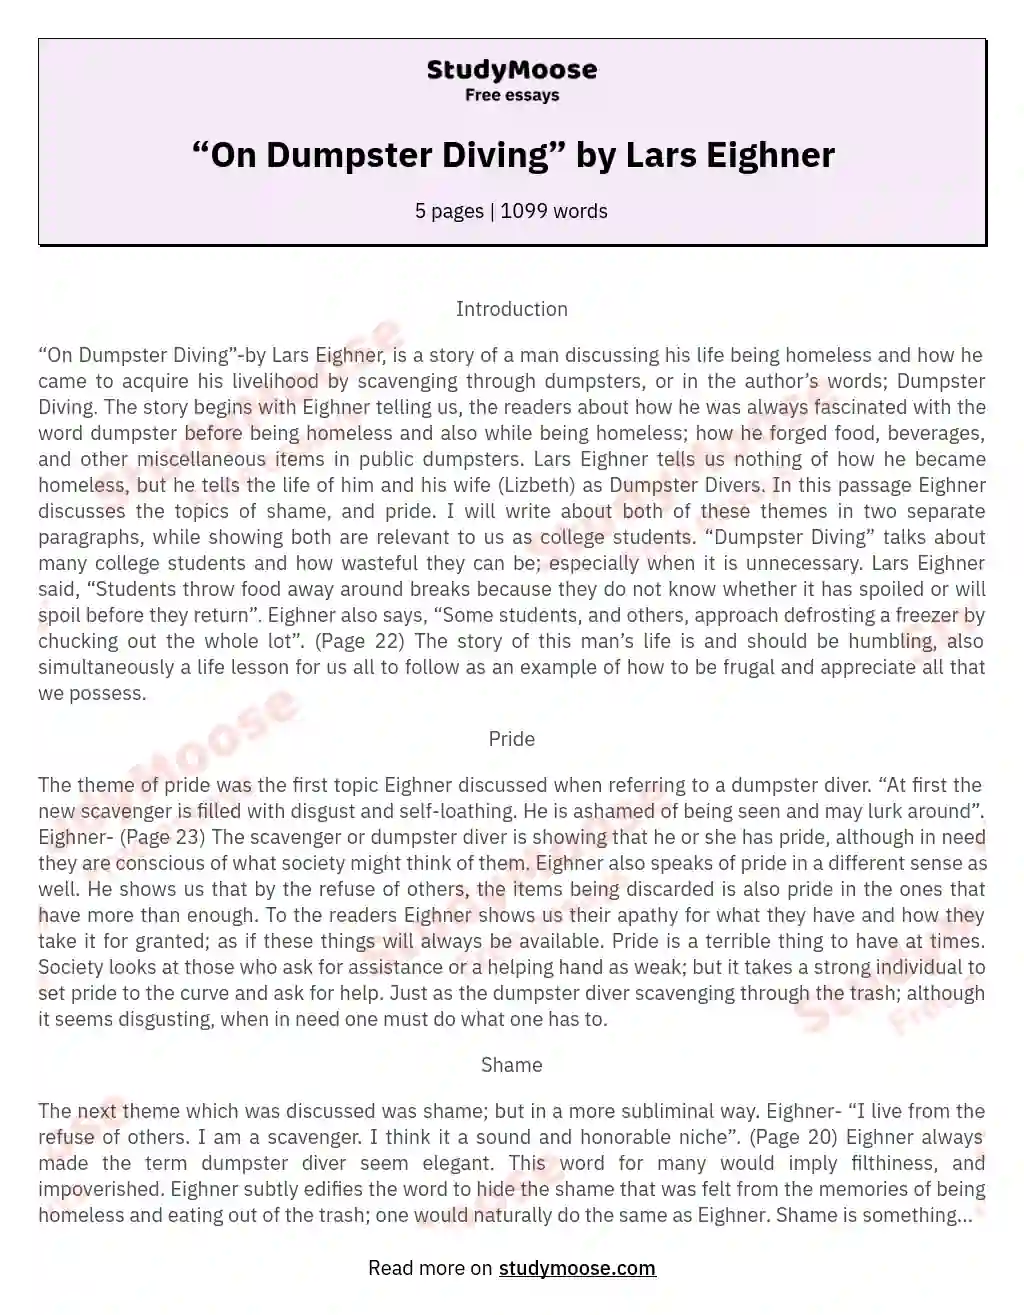 “On Dumpster Diving” by Lars Eighner essay